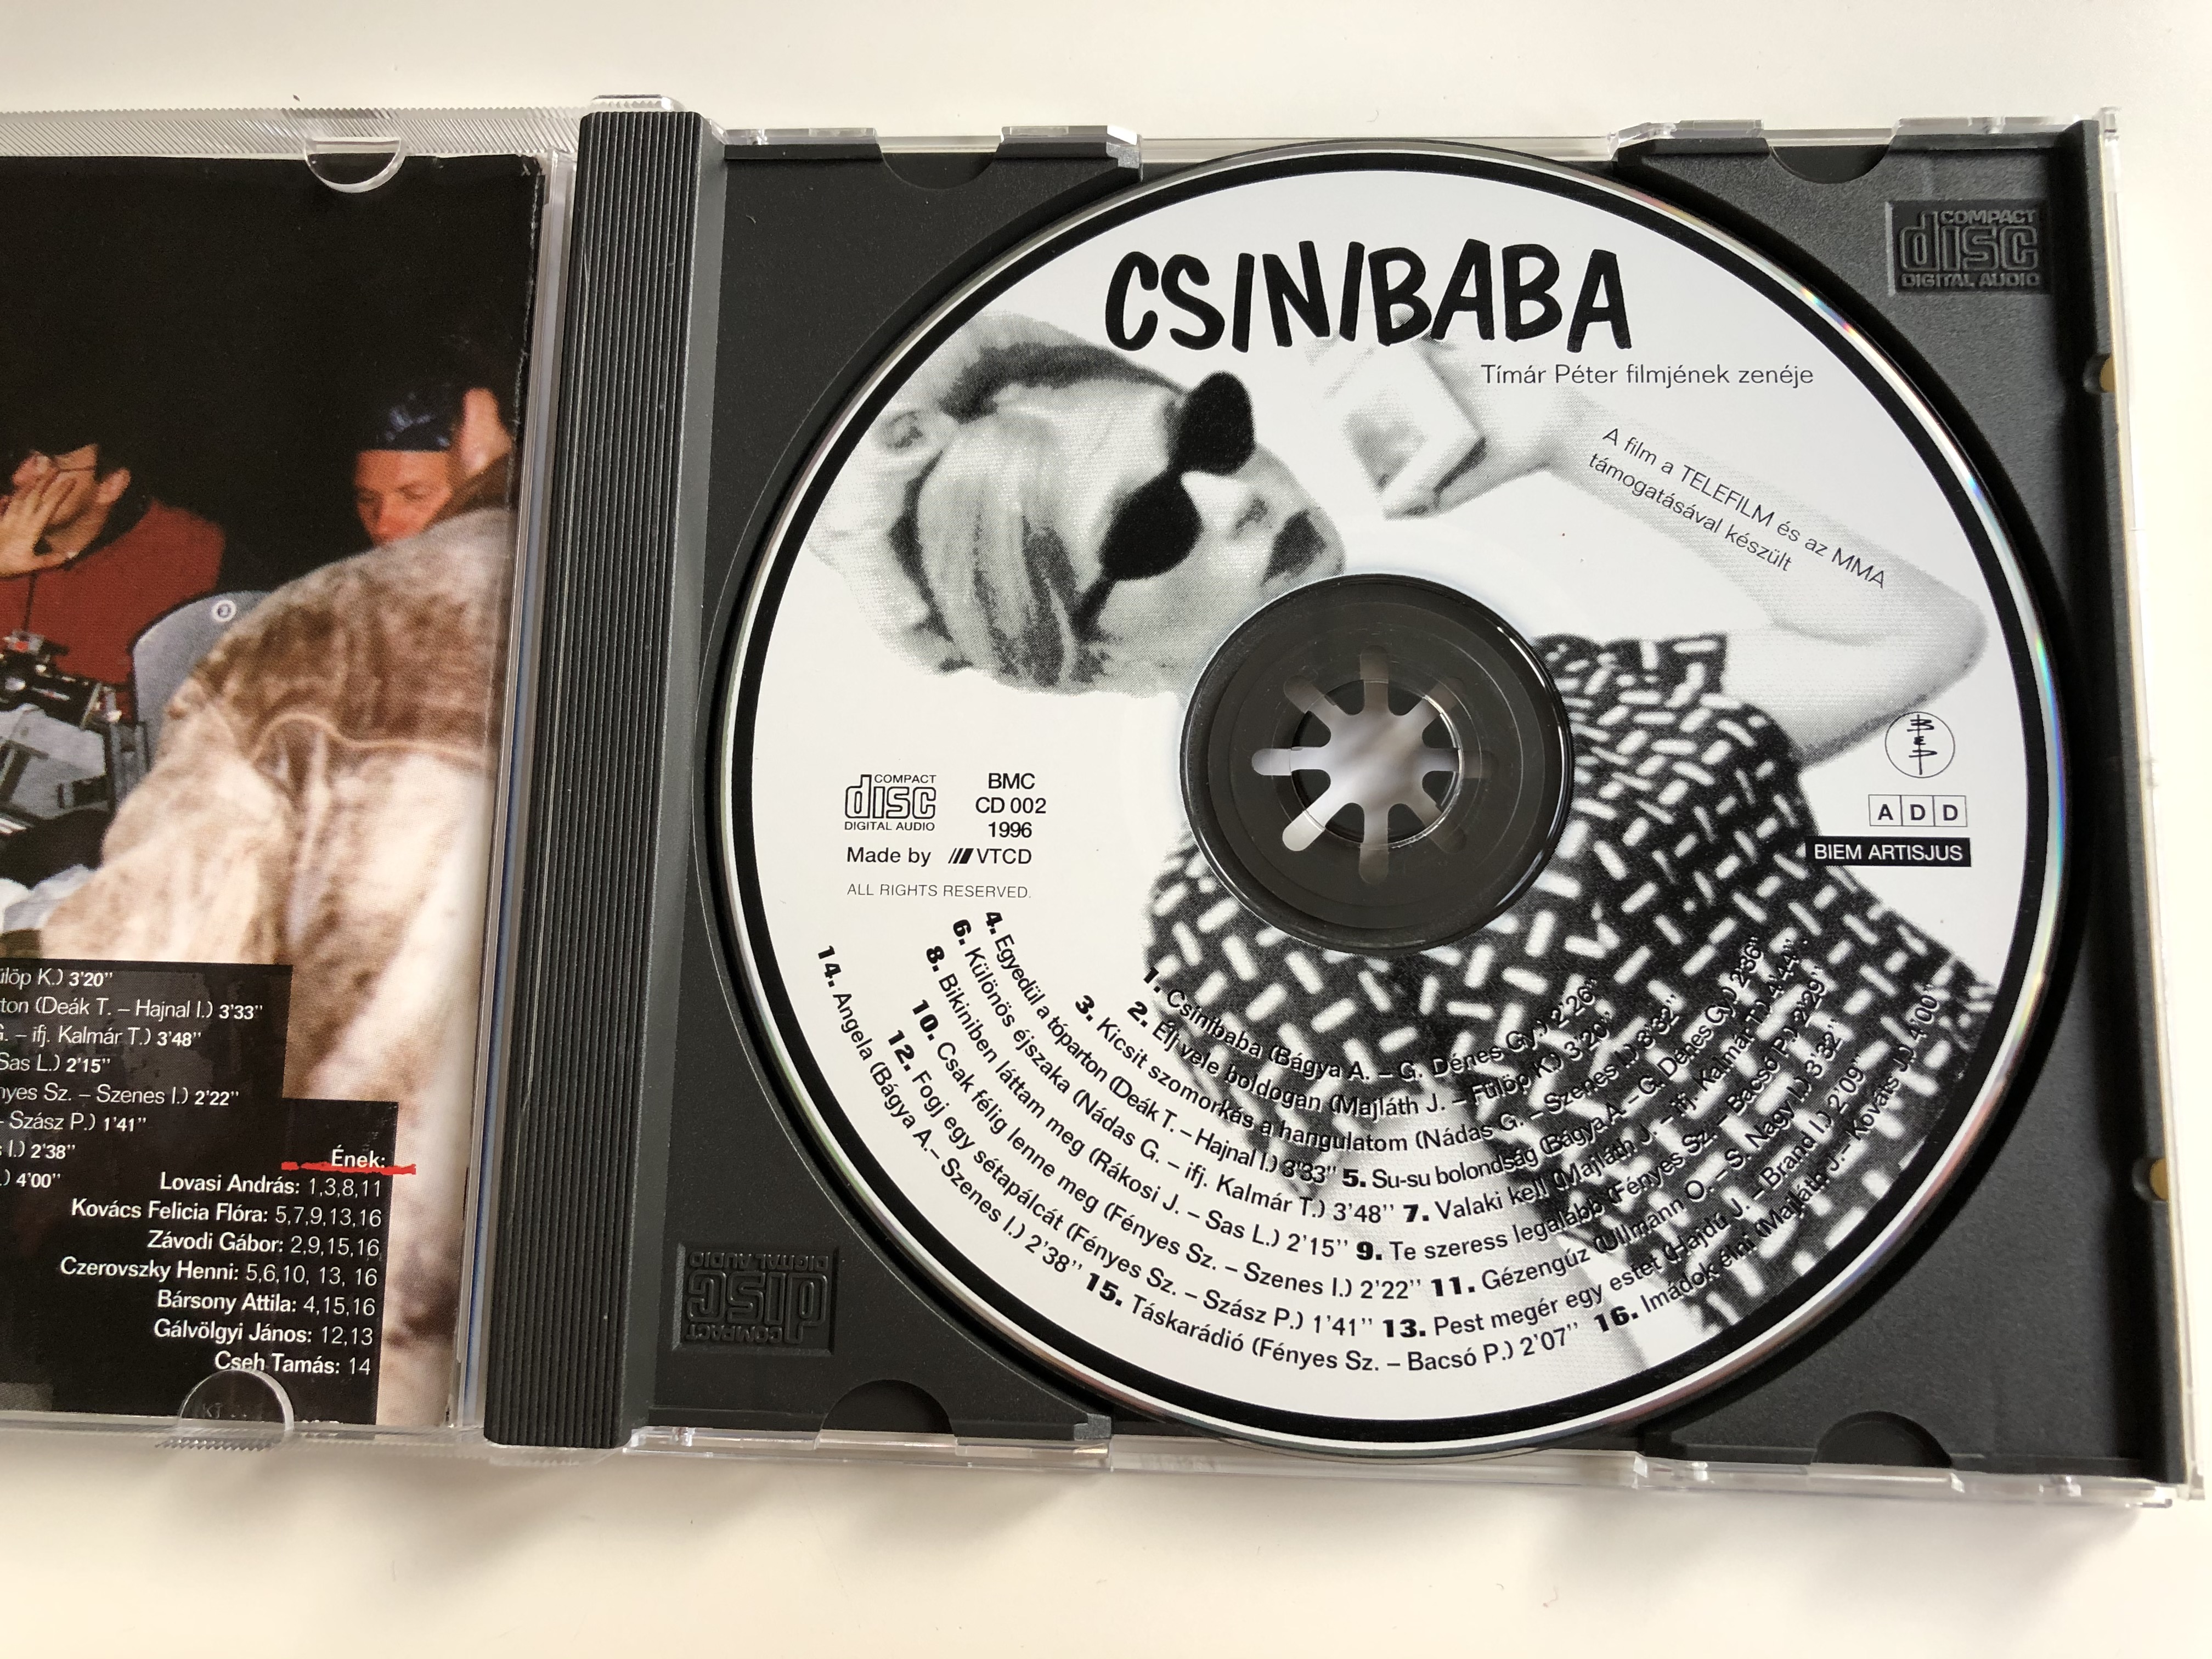 csinibaba-az-objektiv-filmstudio-filmje-bouvard-p-cuchet-records-audio-cd-1996-bmc-cd-002-4-.jpg